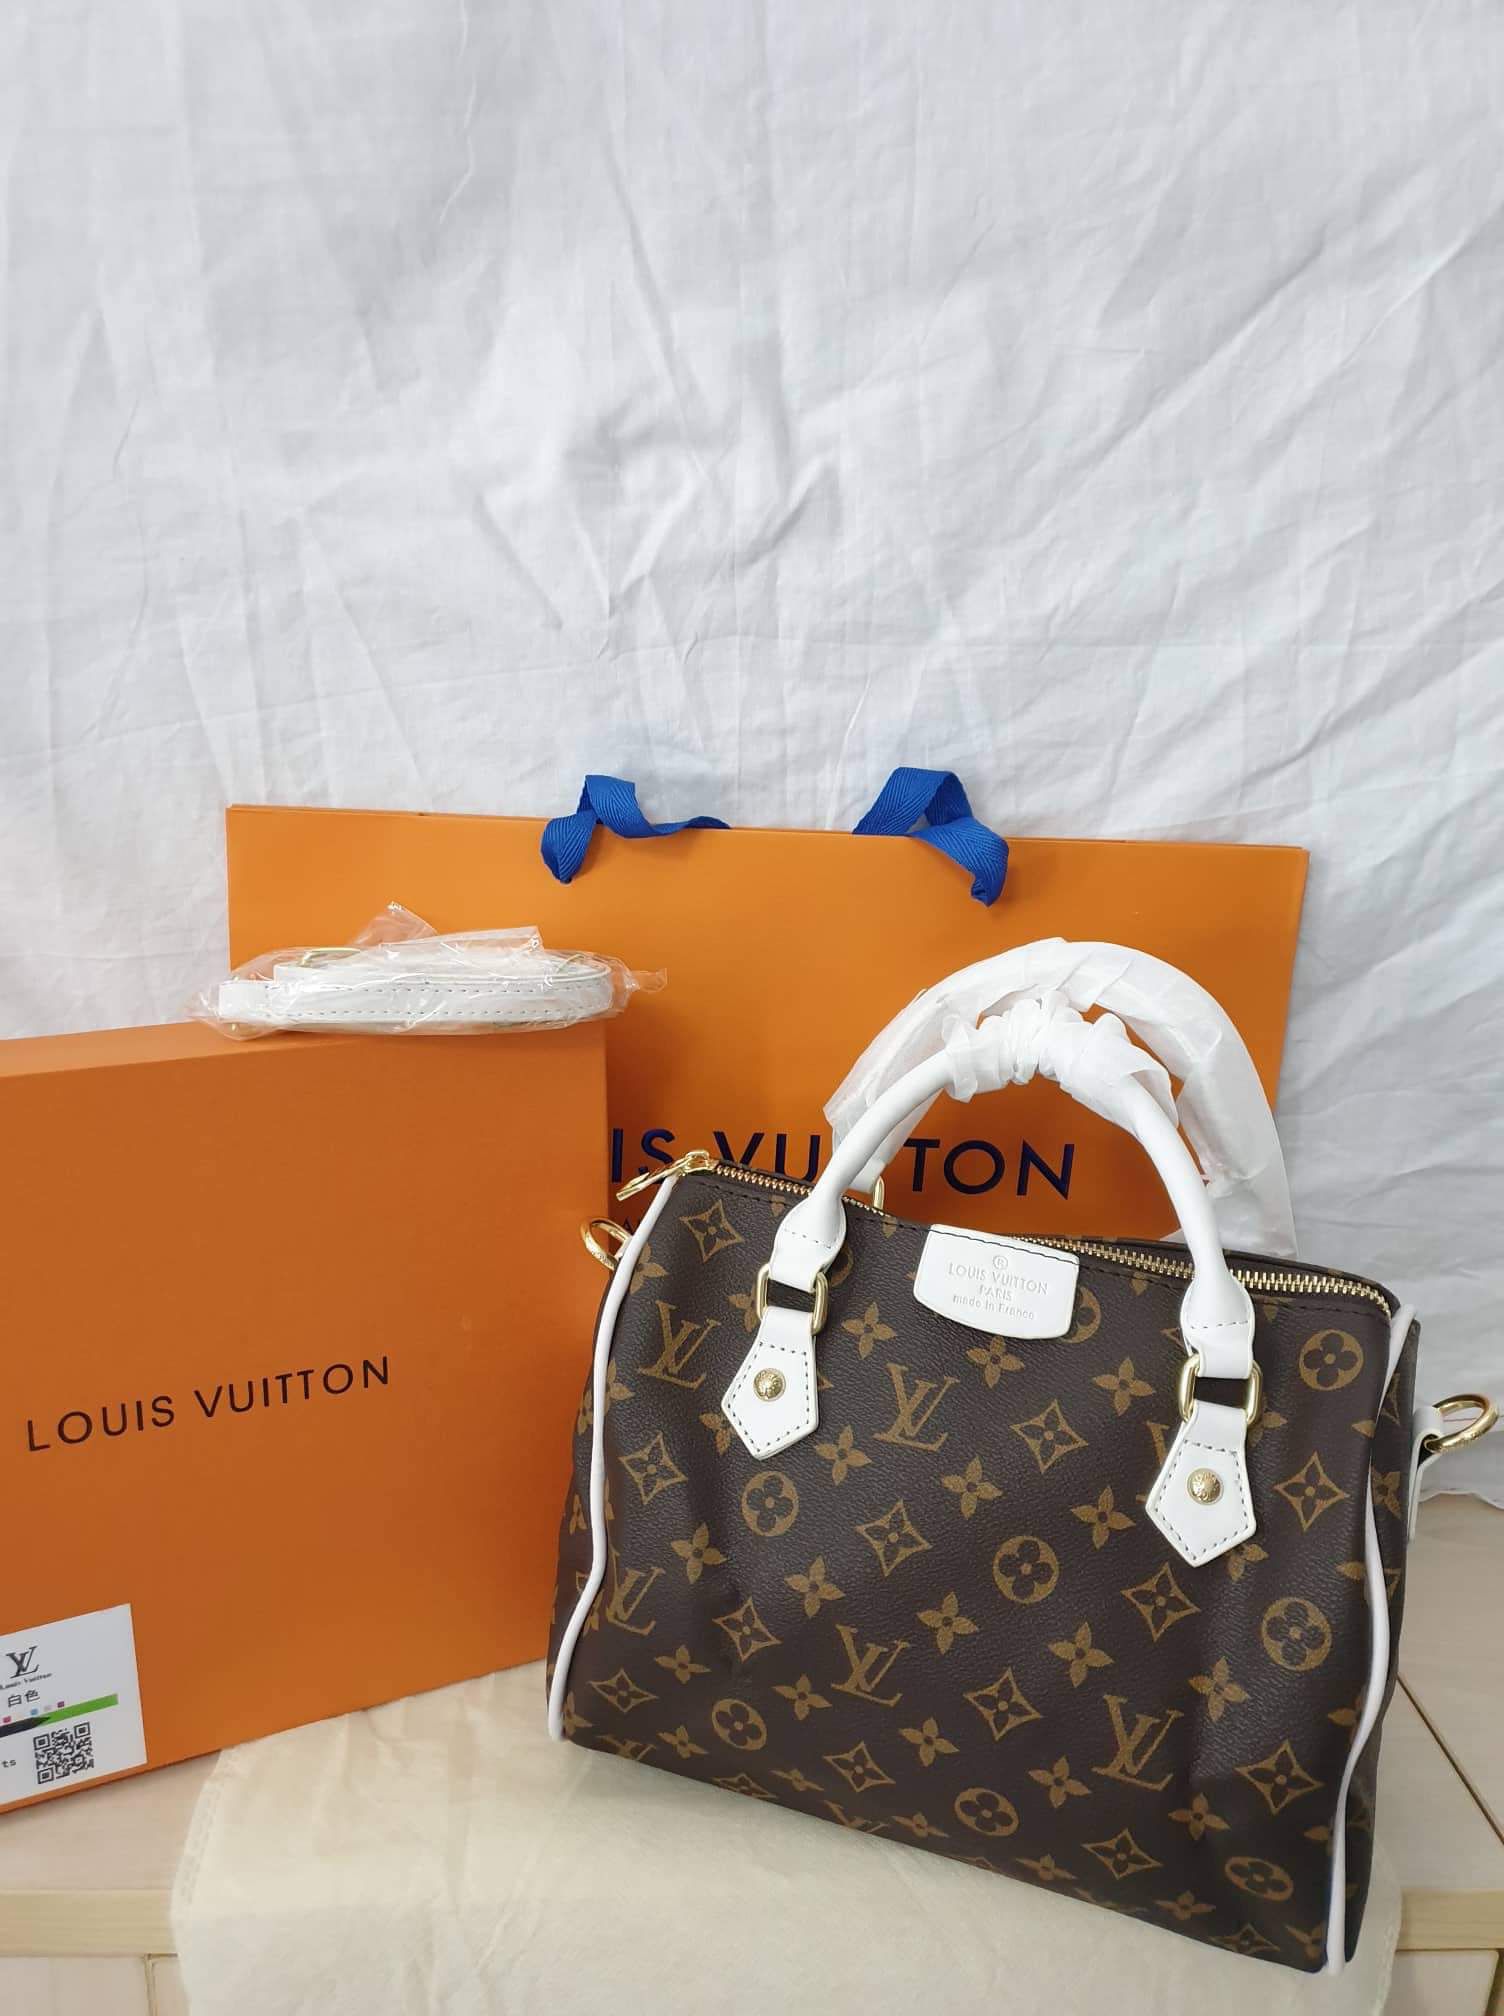 LOUIS VUITTON SANDALS WOMEN for Sale in Las Vegas, NV - OfferUp